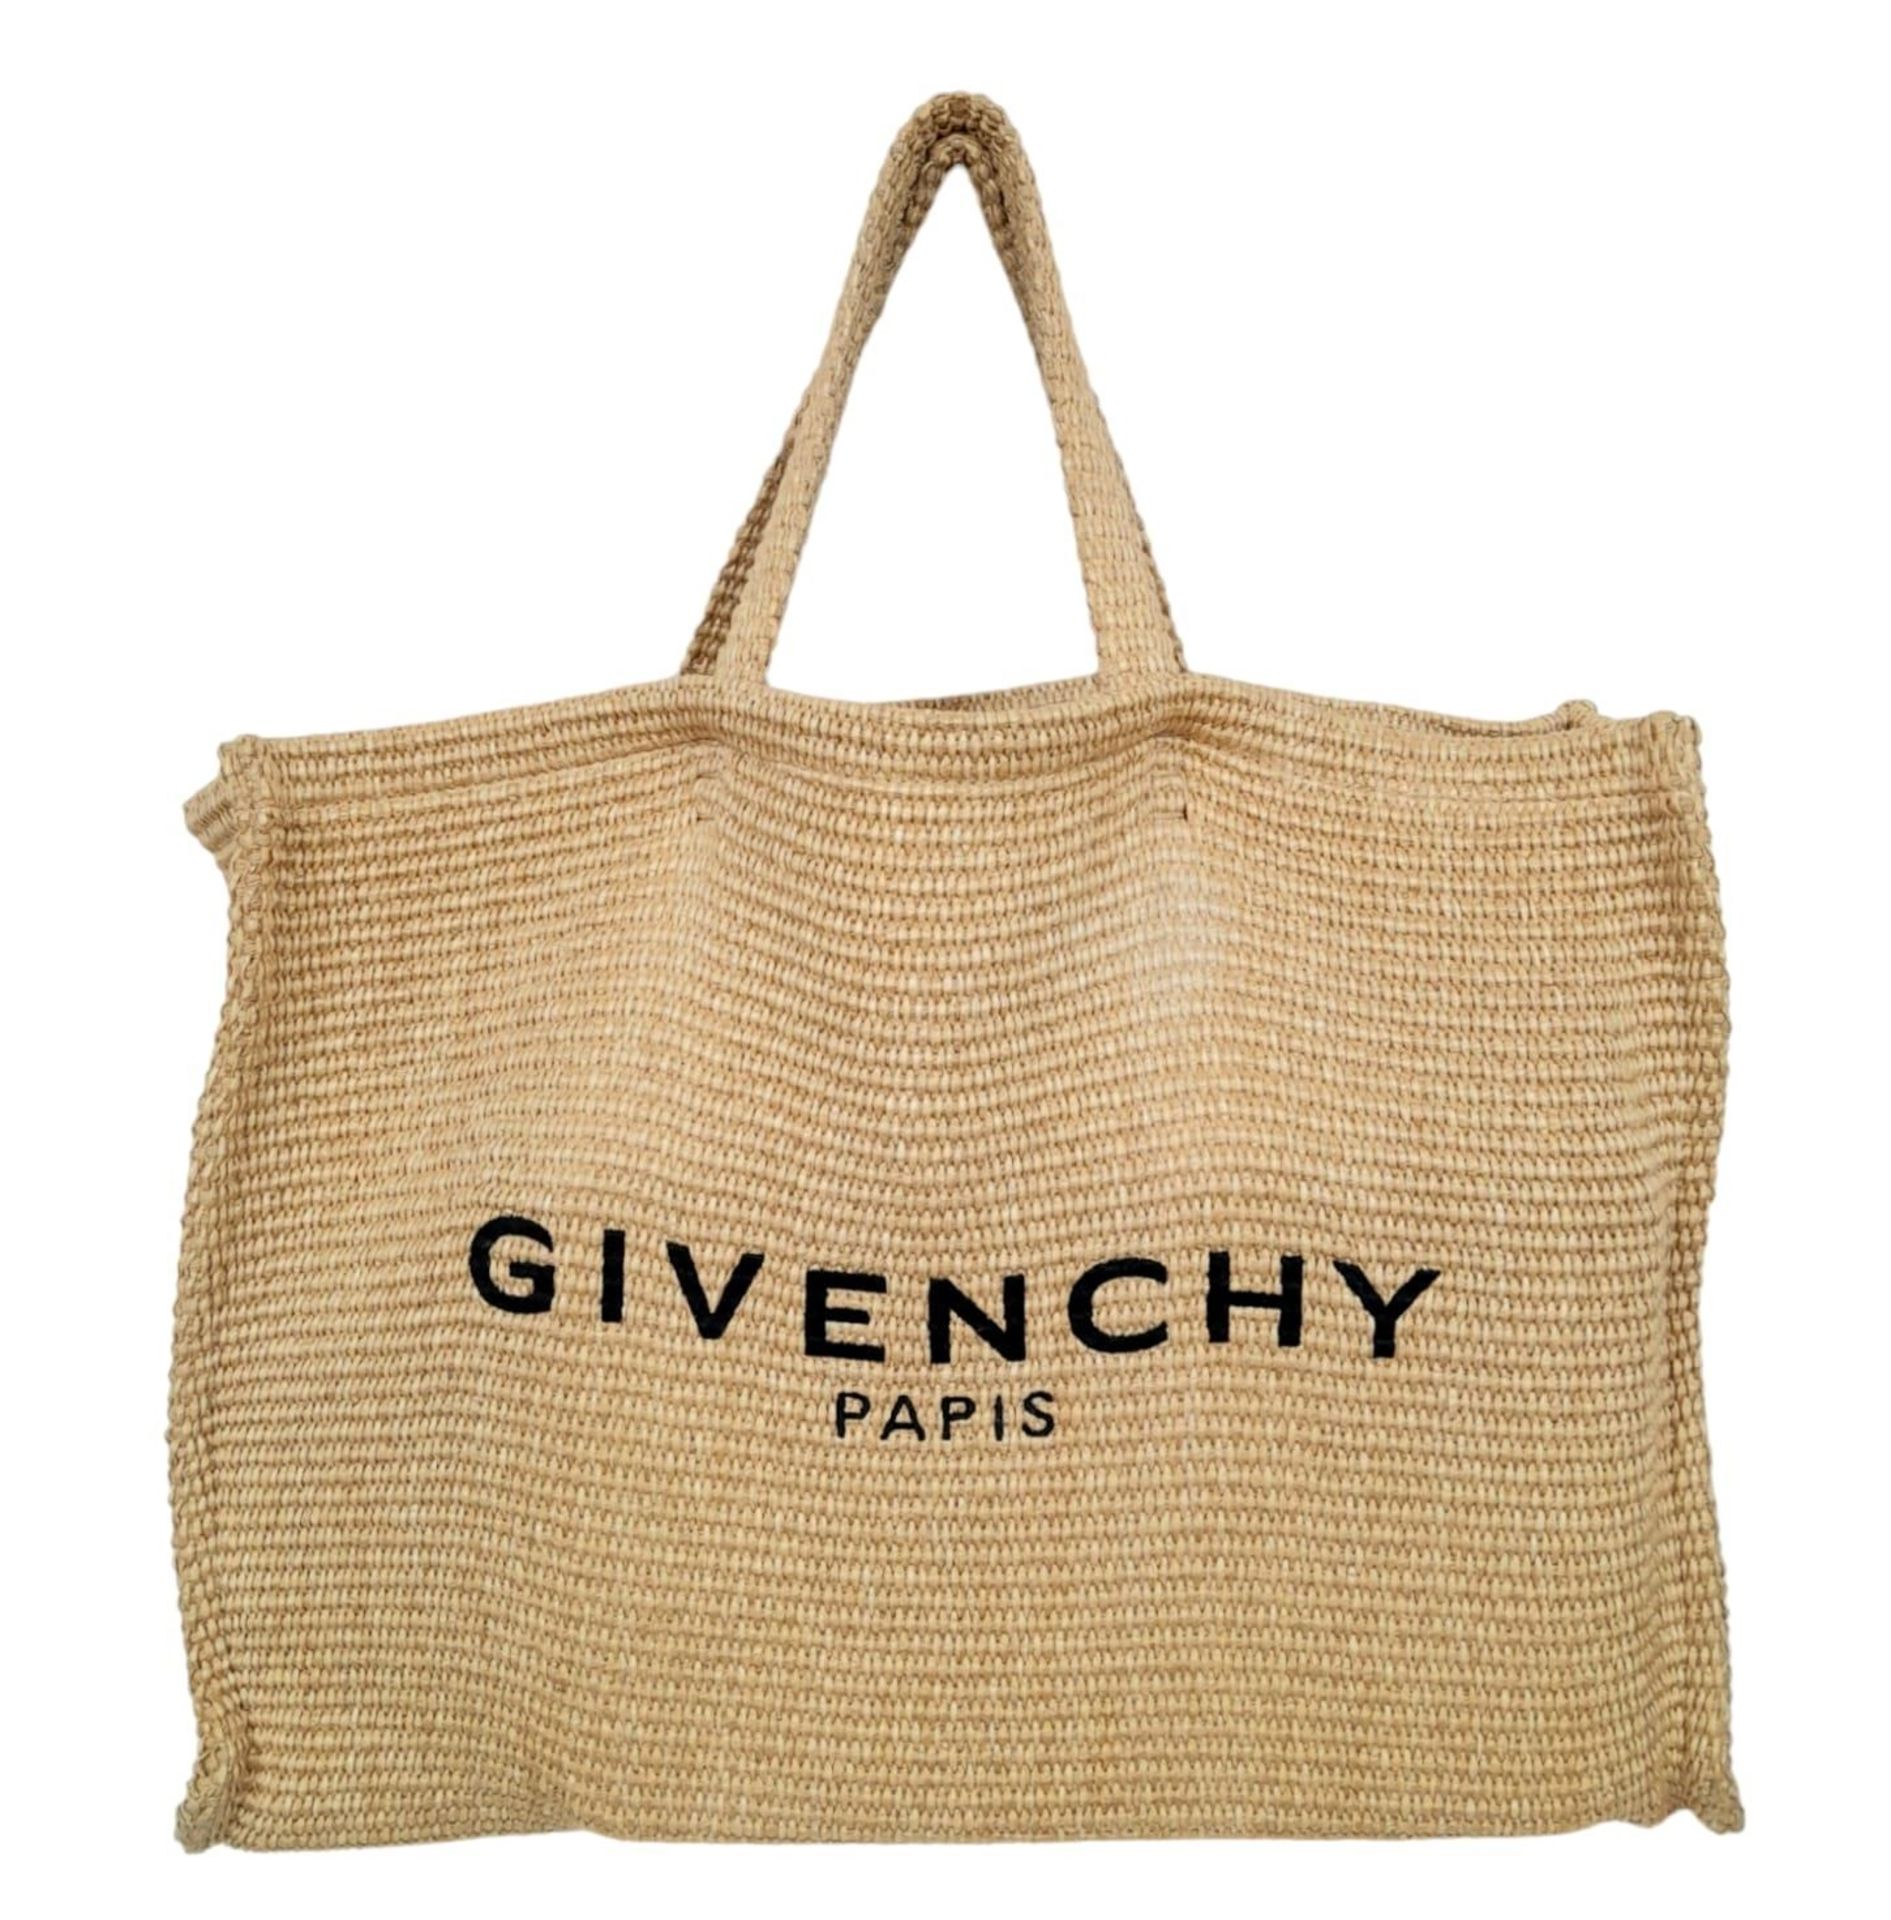 A Givenchy Raffia Tote Bag. Woven textile exterior with two straps. Woven textile interior with an